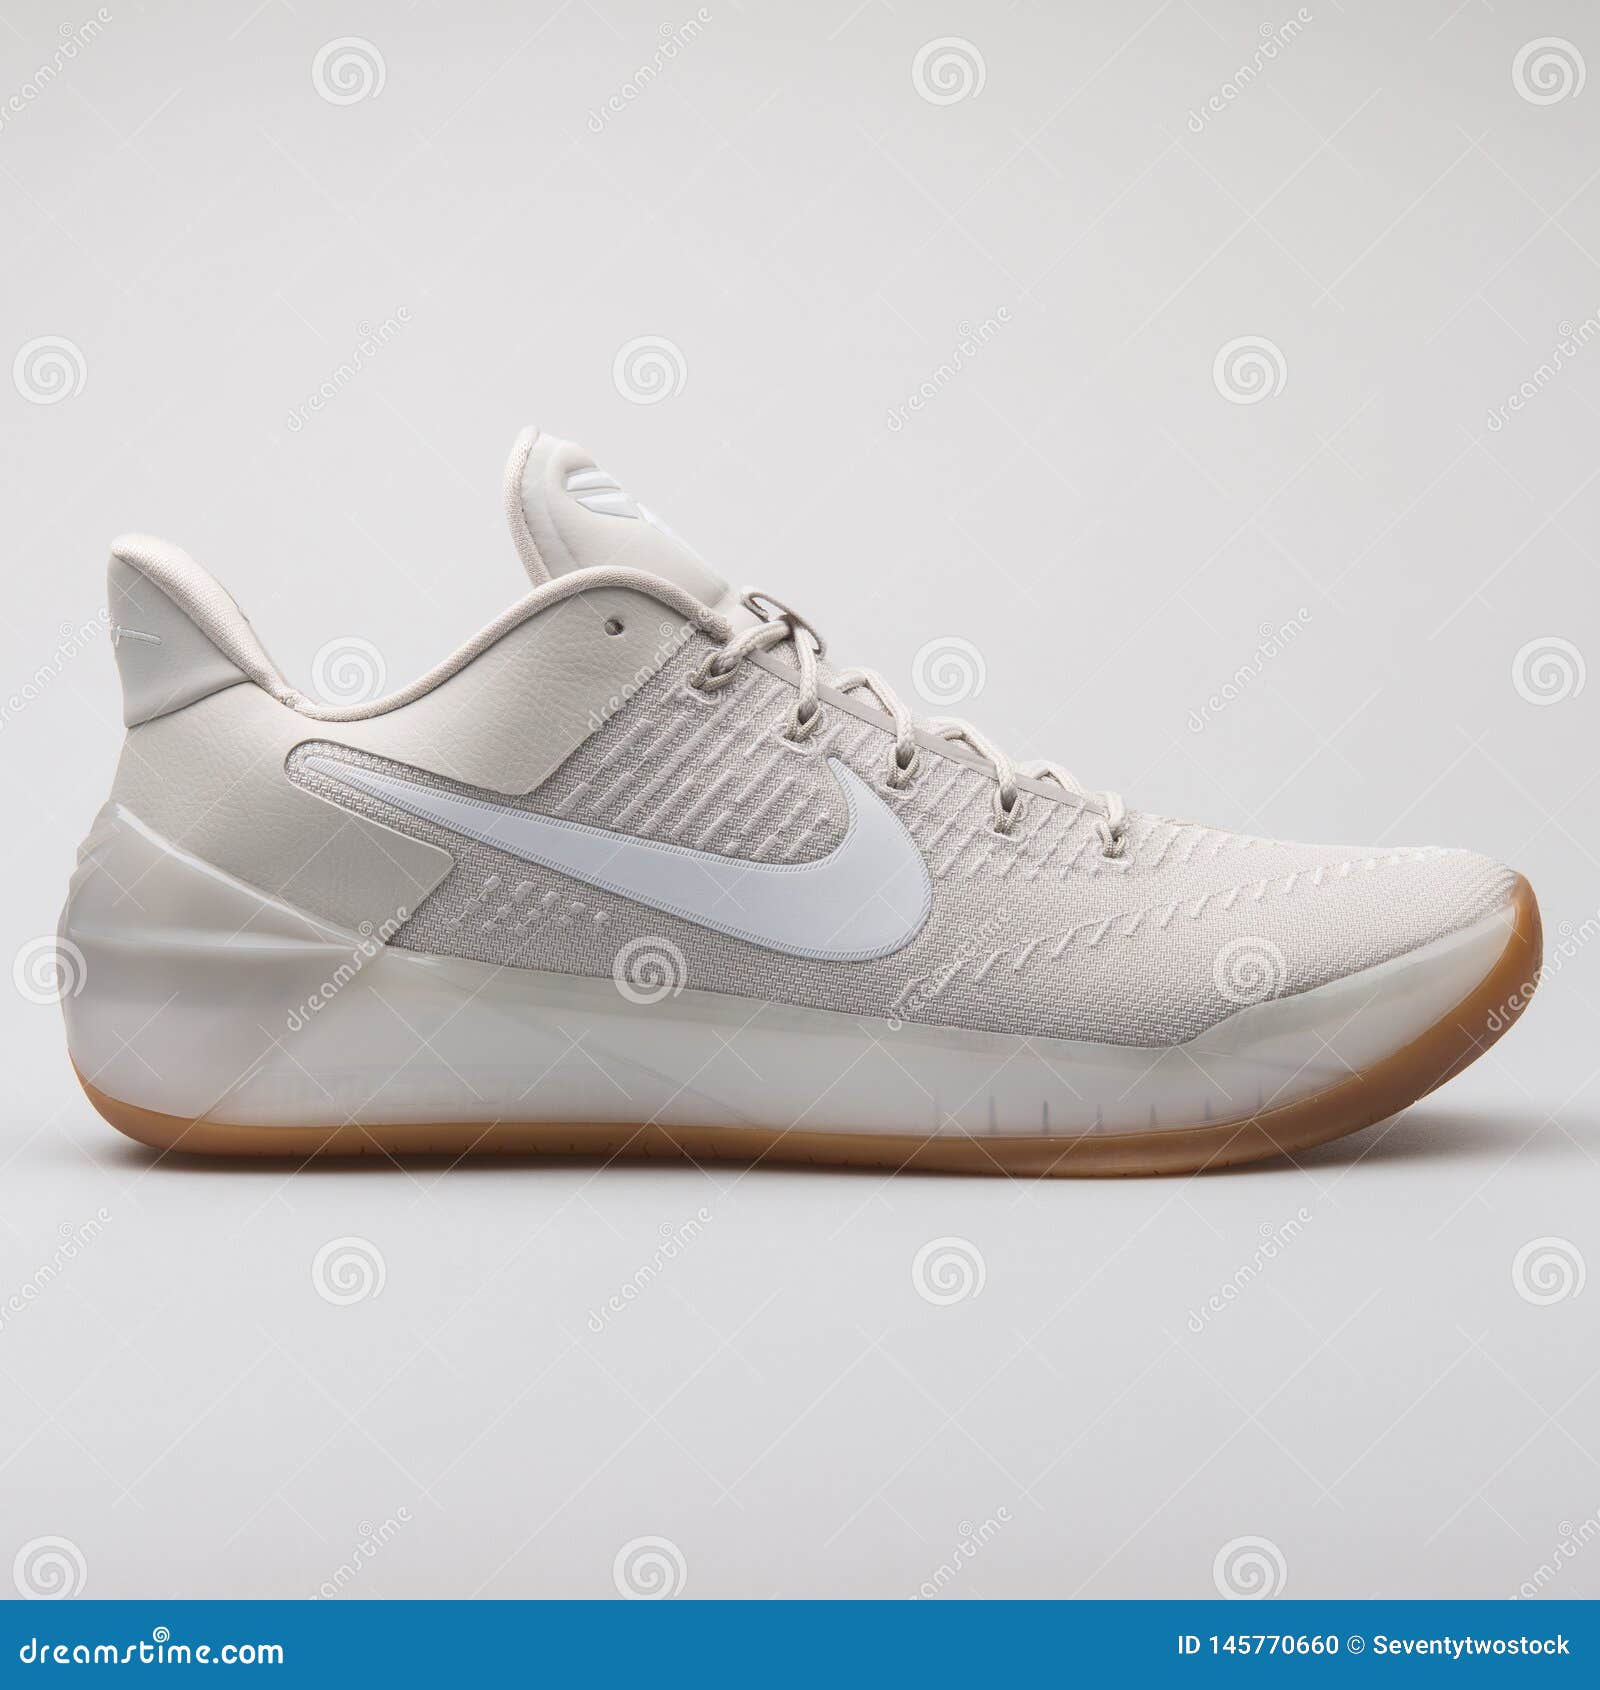 Repeler Boquilla camarera Nike Kobe a.D editorial image. Image of casual, object - 145770660